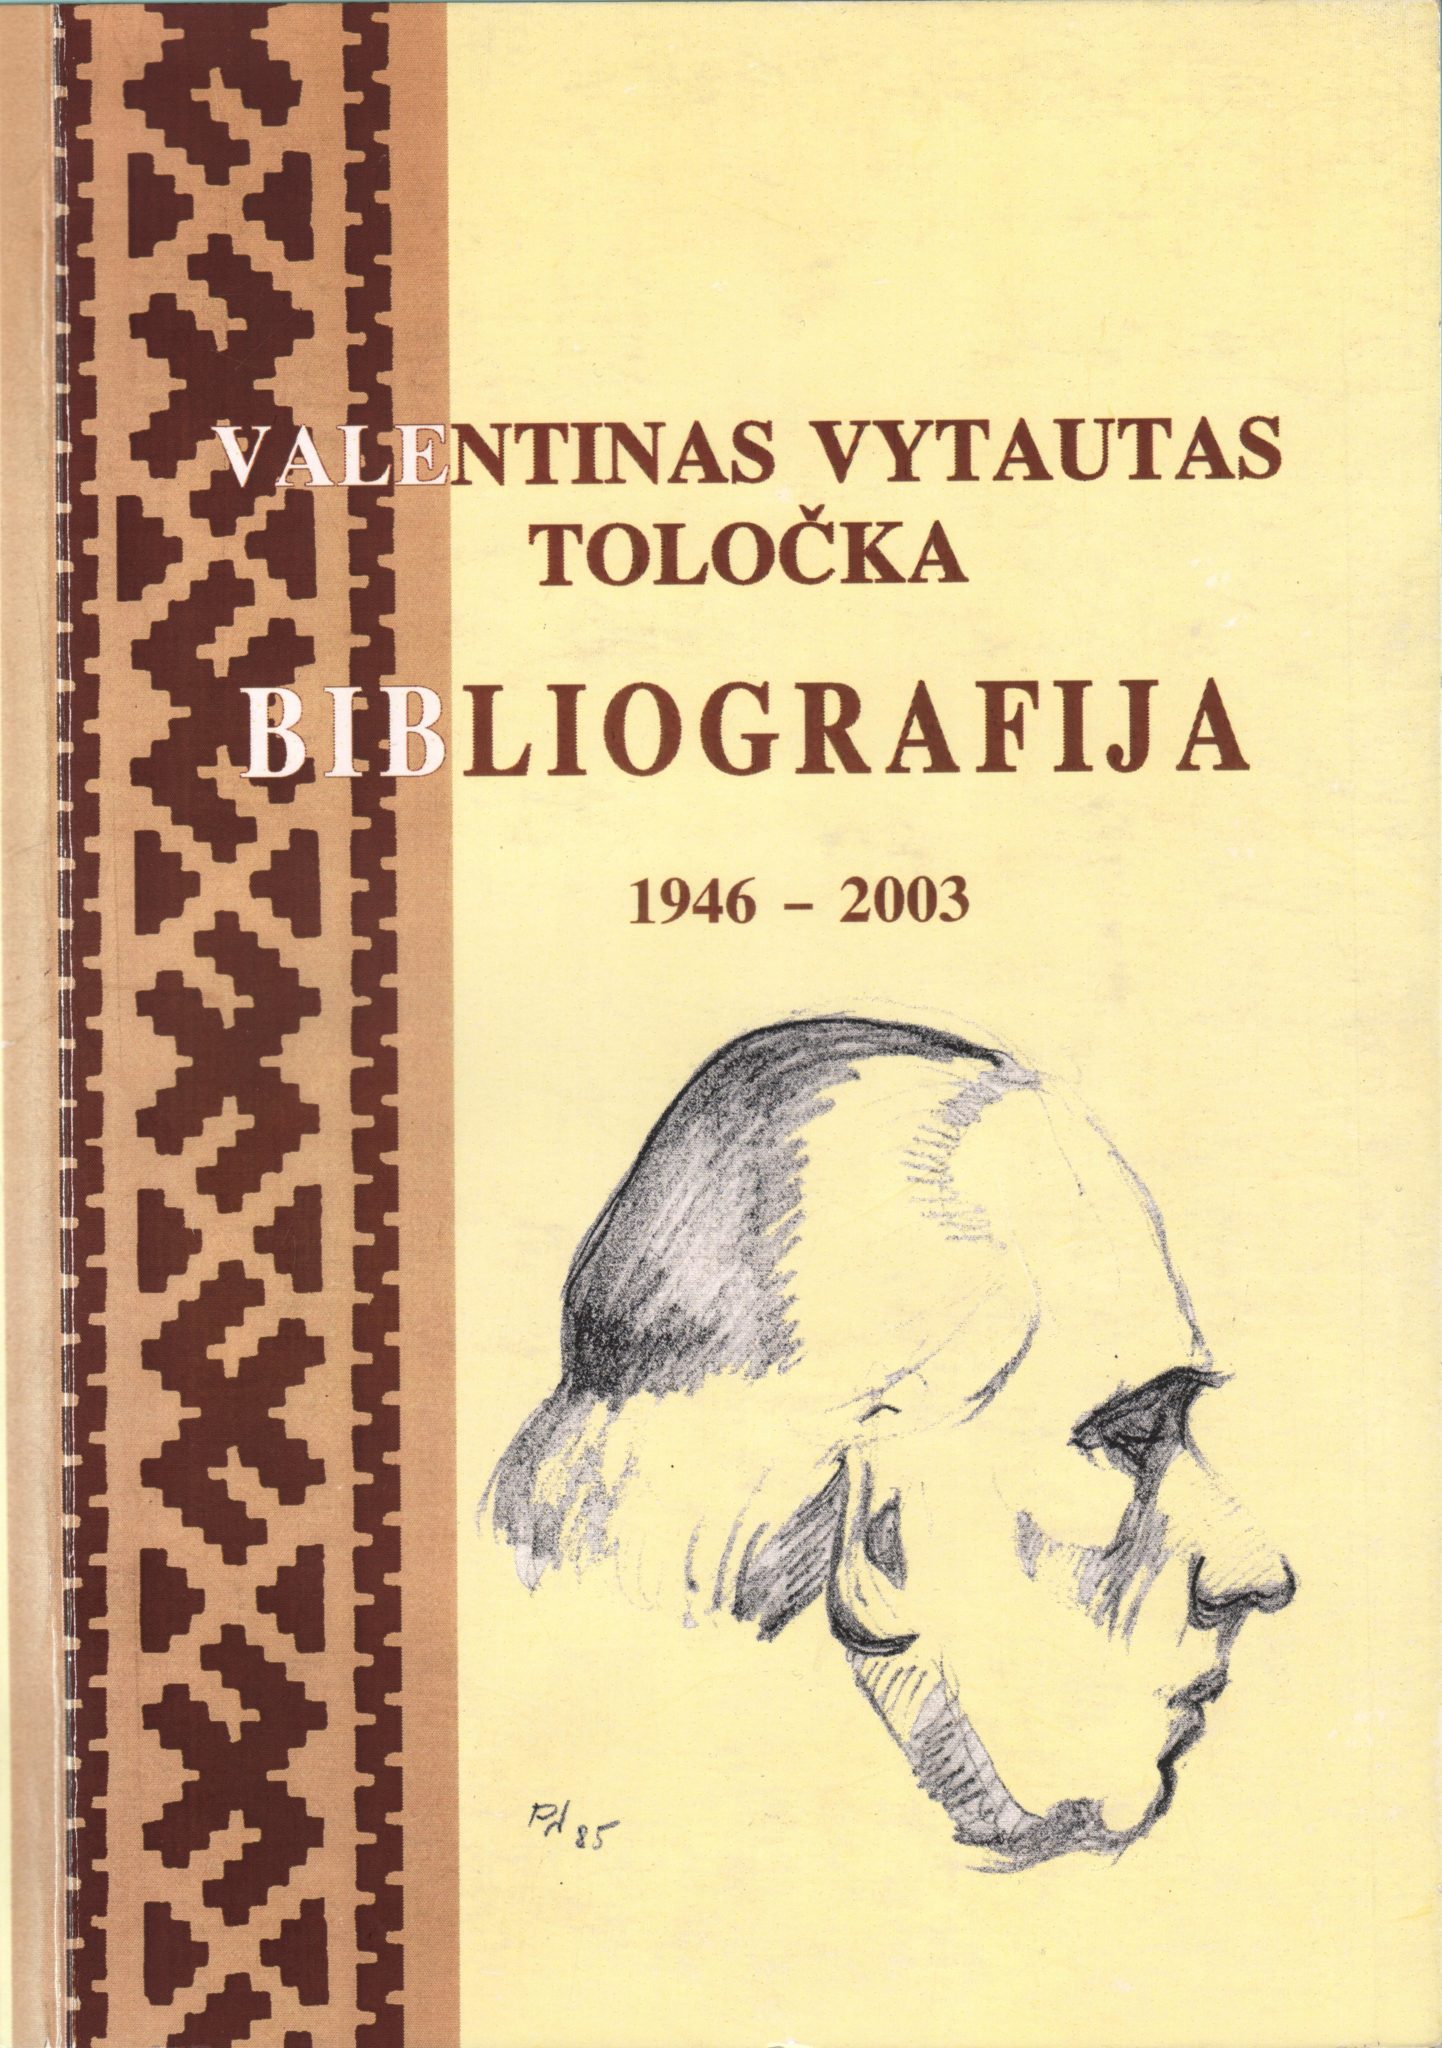 V. V. Toločka: bibliografija, 1946–2003. – Vilnius, 2004. Knygos viršelis.